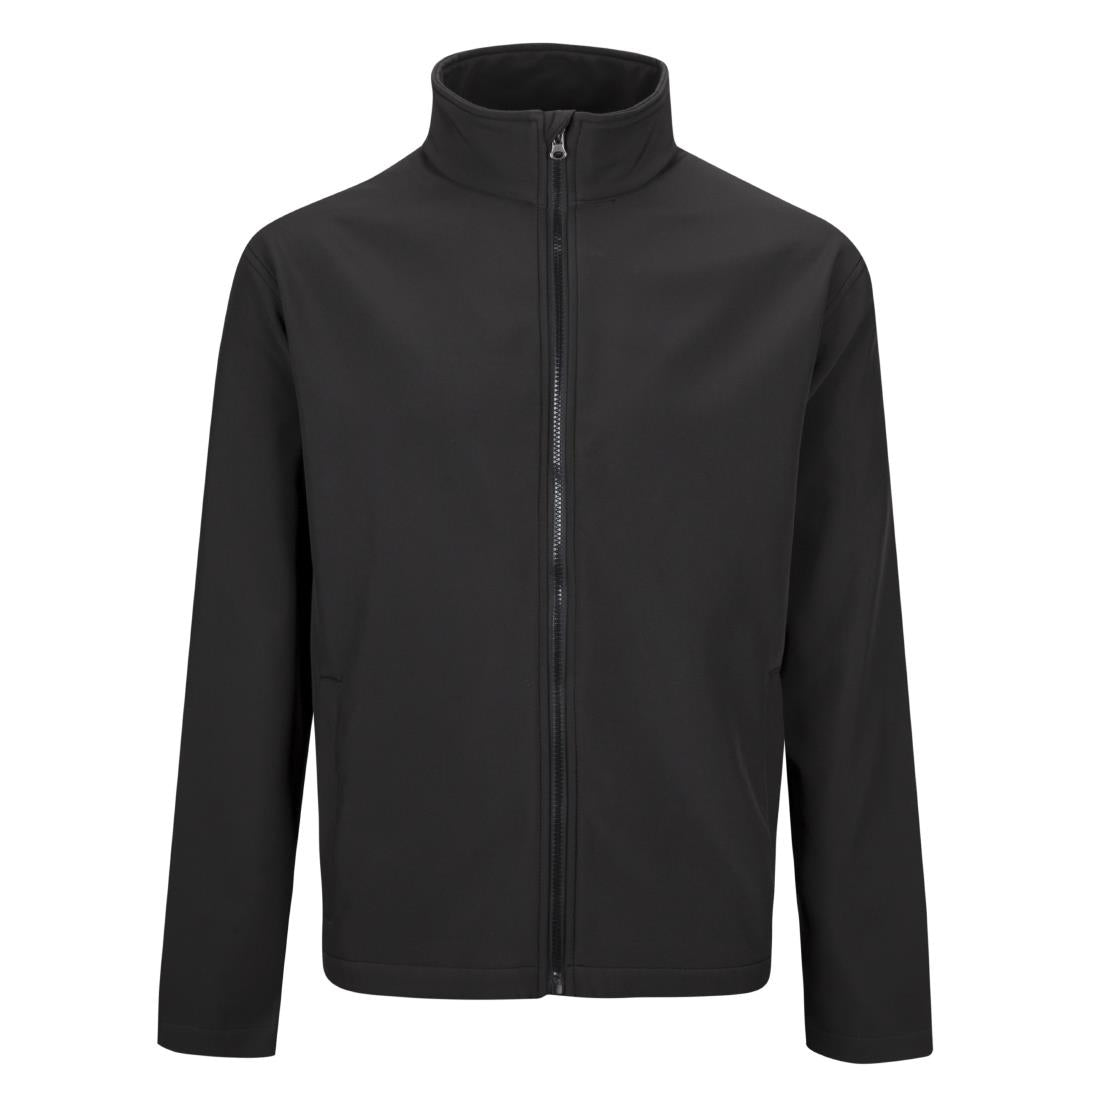 BA109-L Portwest Softshell Two Layer Jacket Black Size L